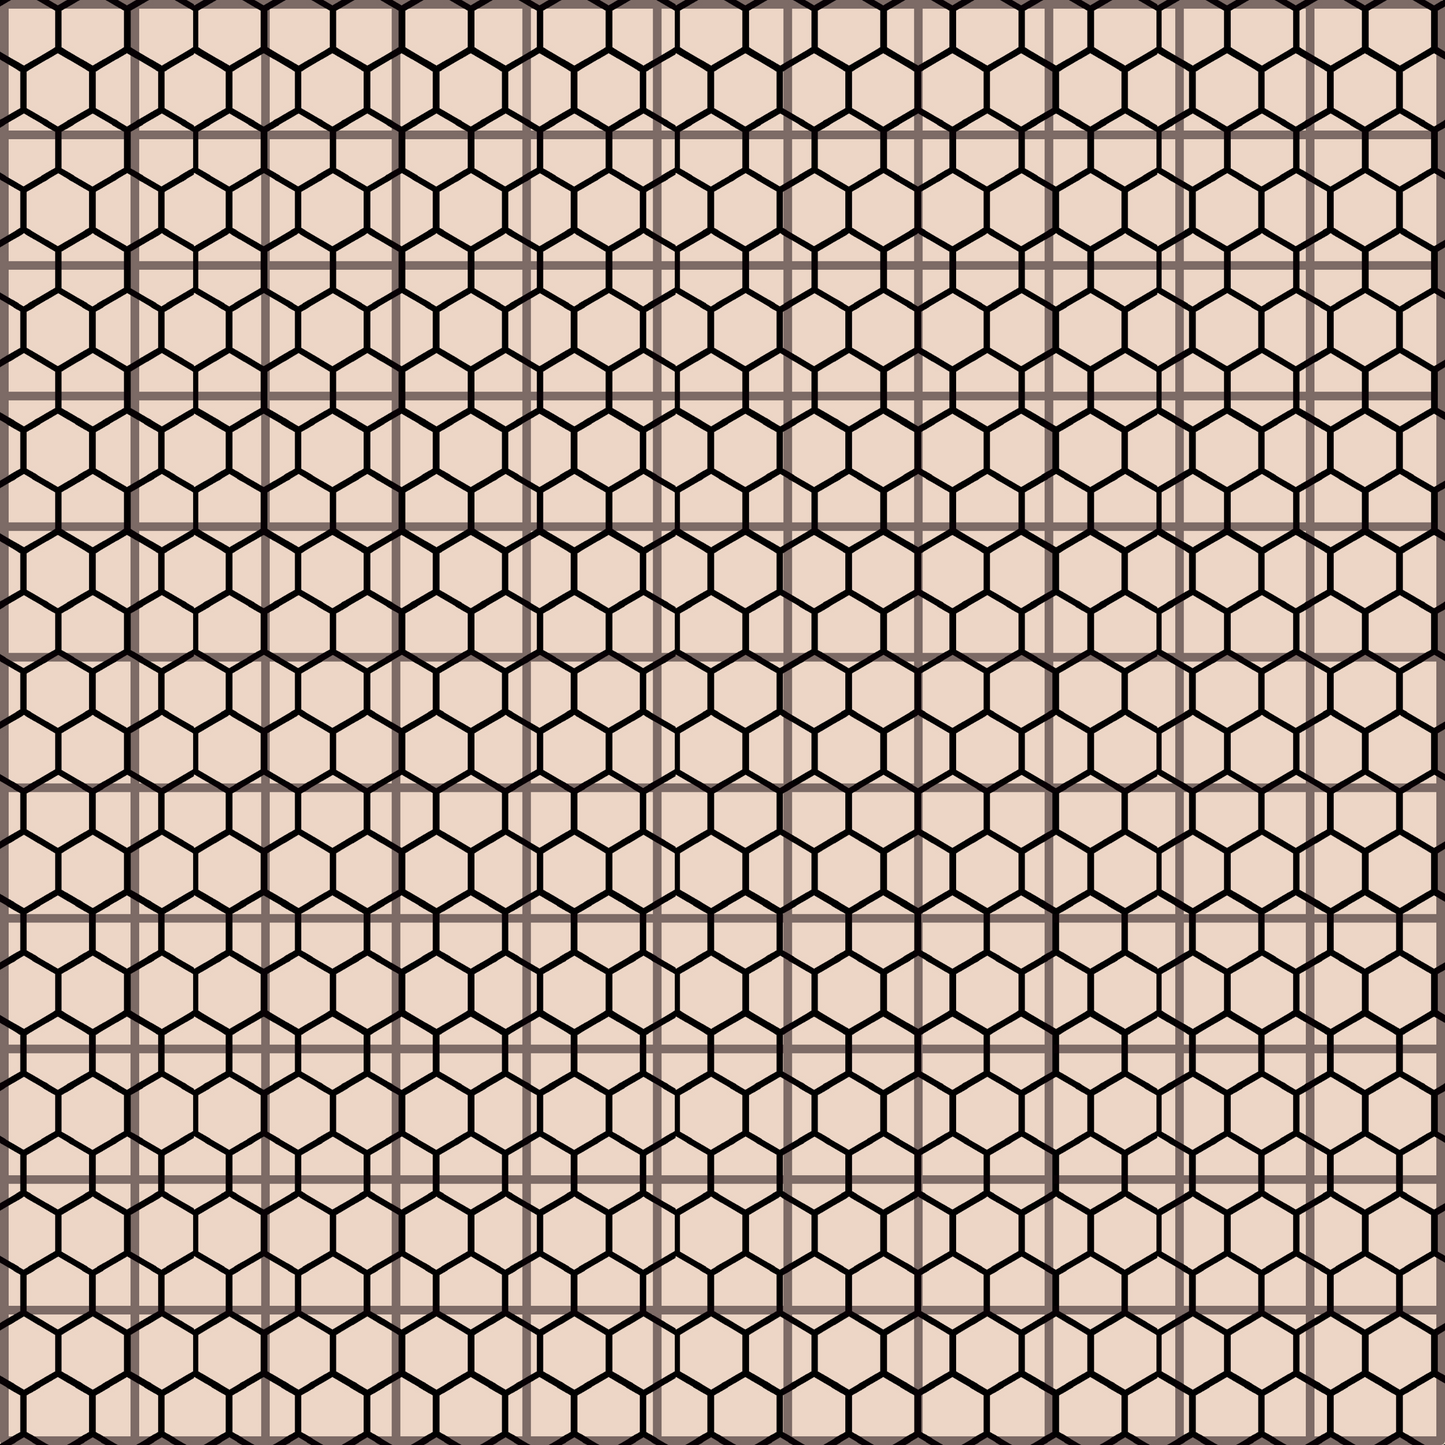 Honeycomb Pattern - Opaque Vinyl Sheet